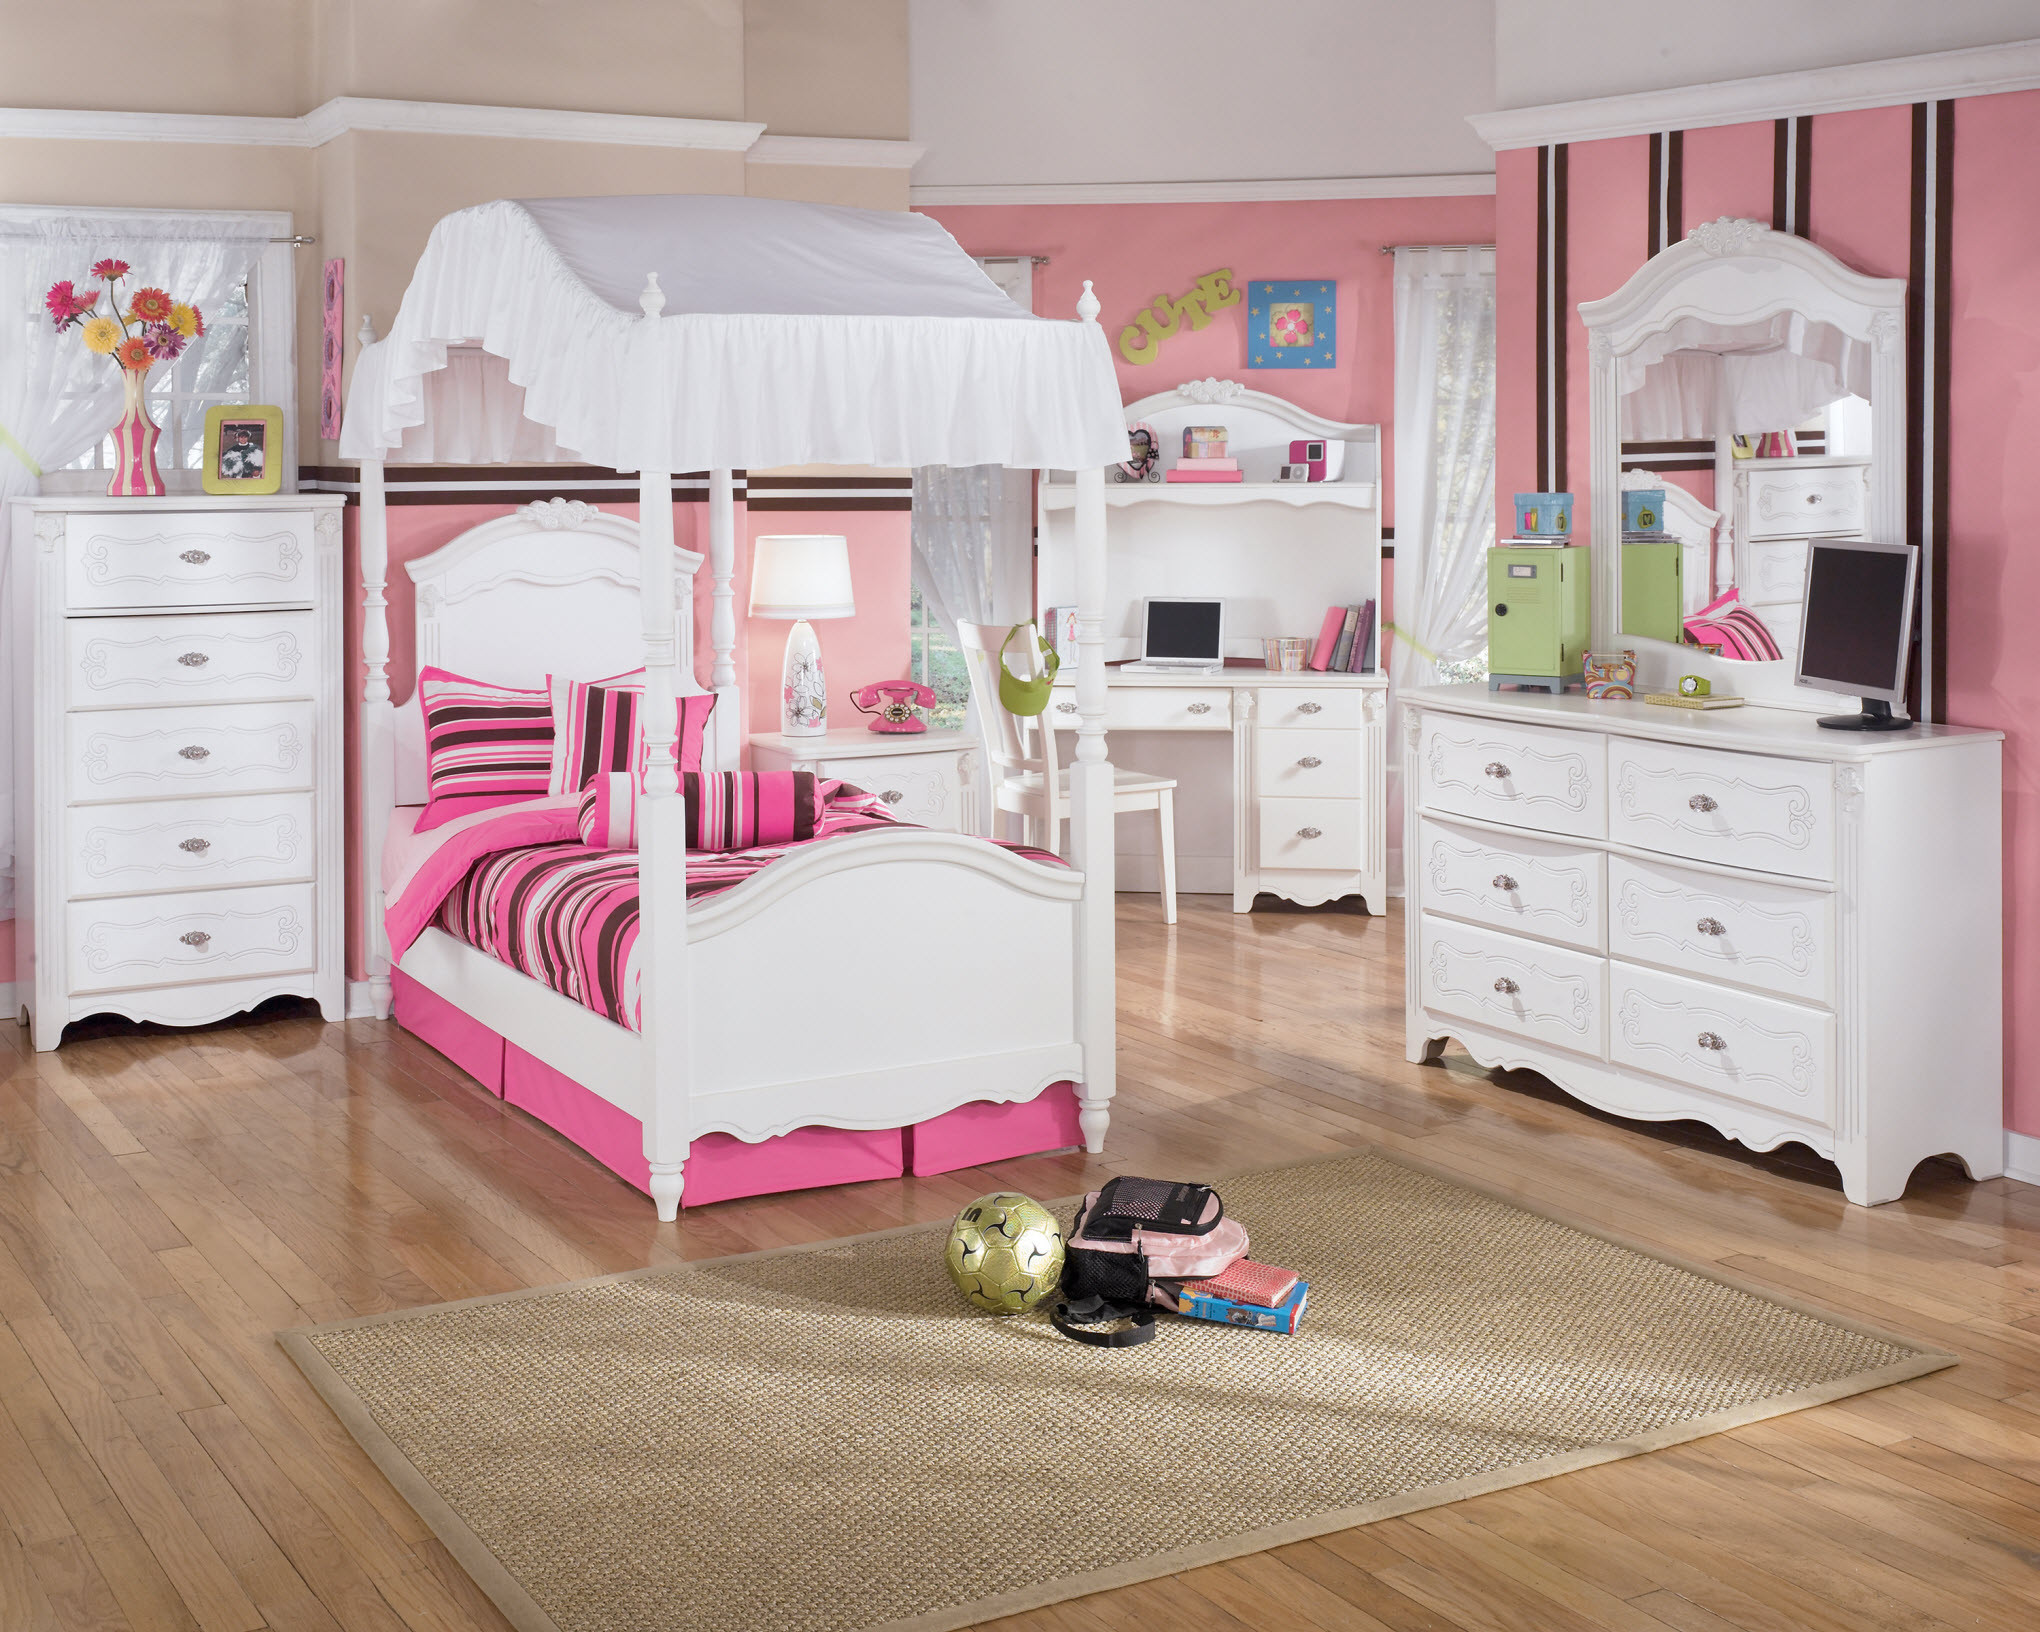 Kids Bedroom Set
 25 Romantic and Modern Ideas for Girls Bedroom Sets